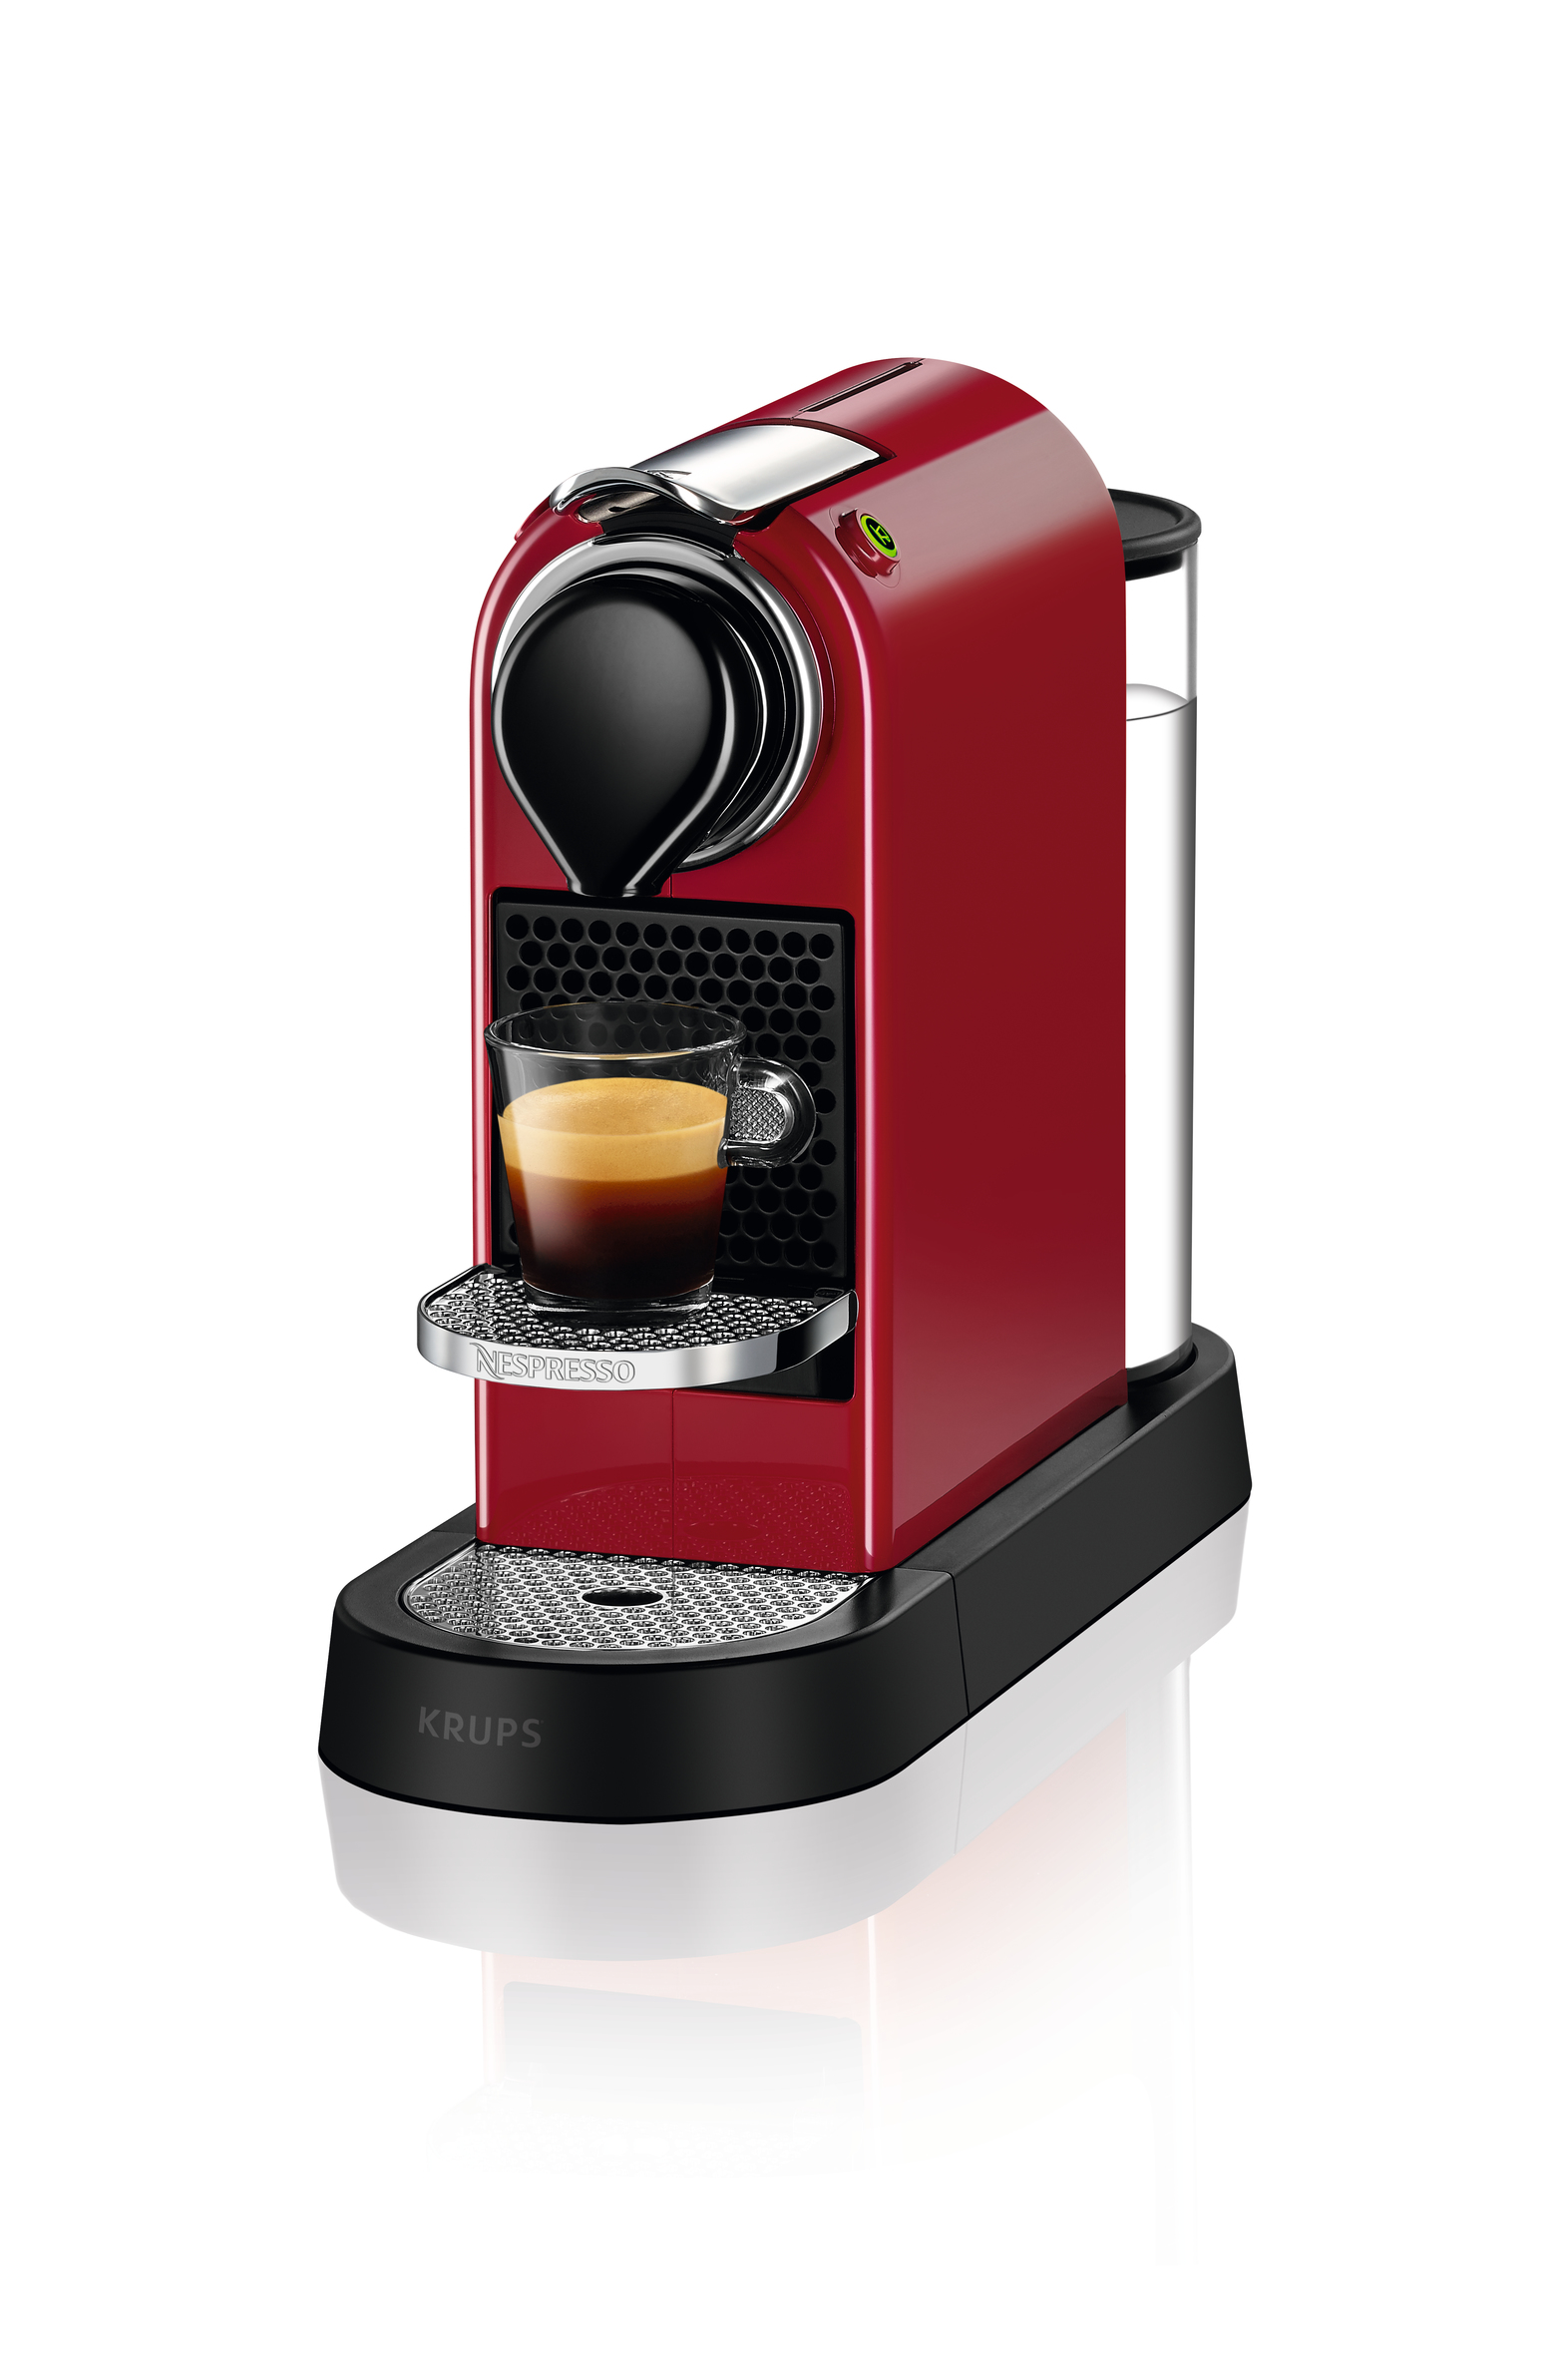 Krups Nespresso XN7415 coffee maker